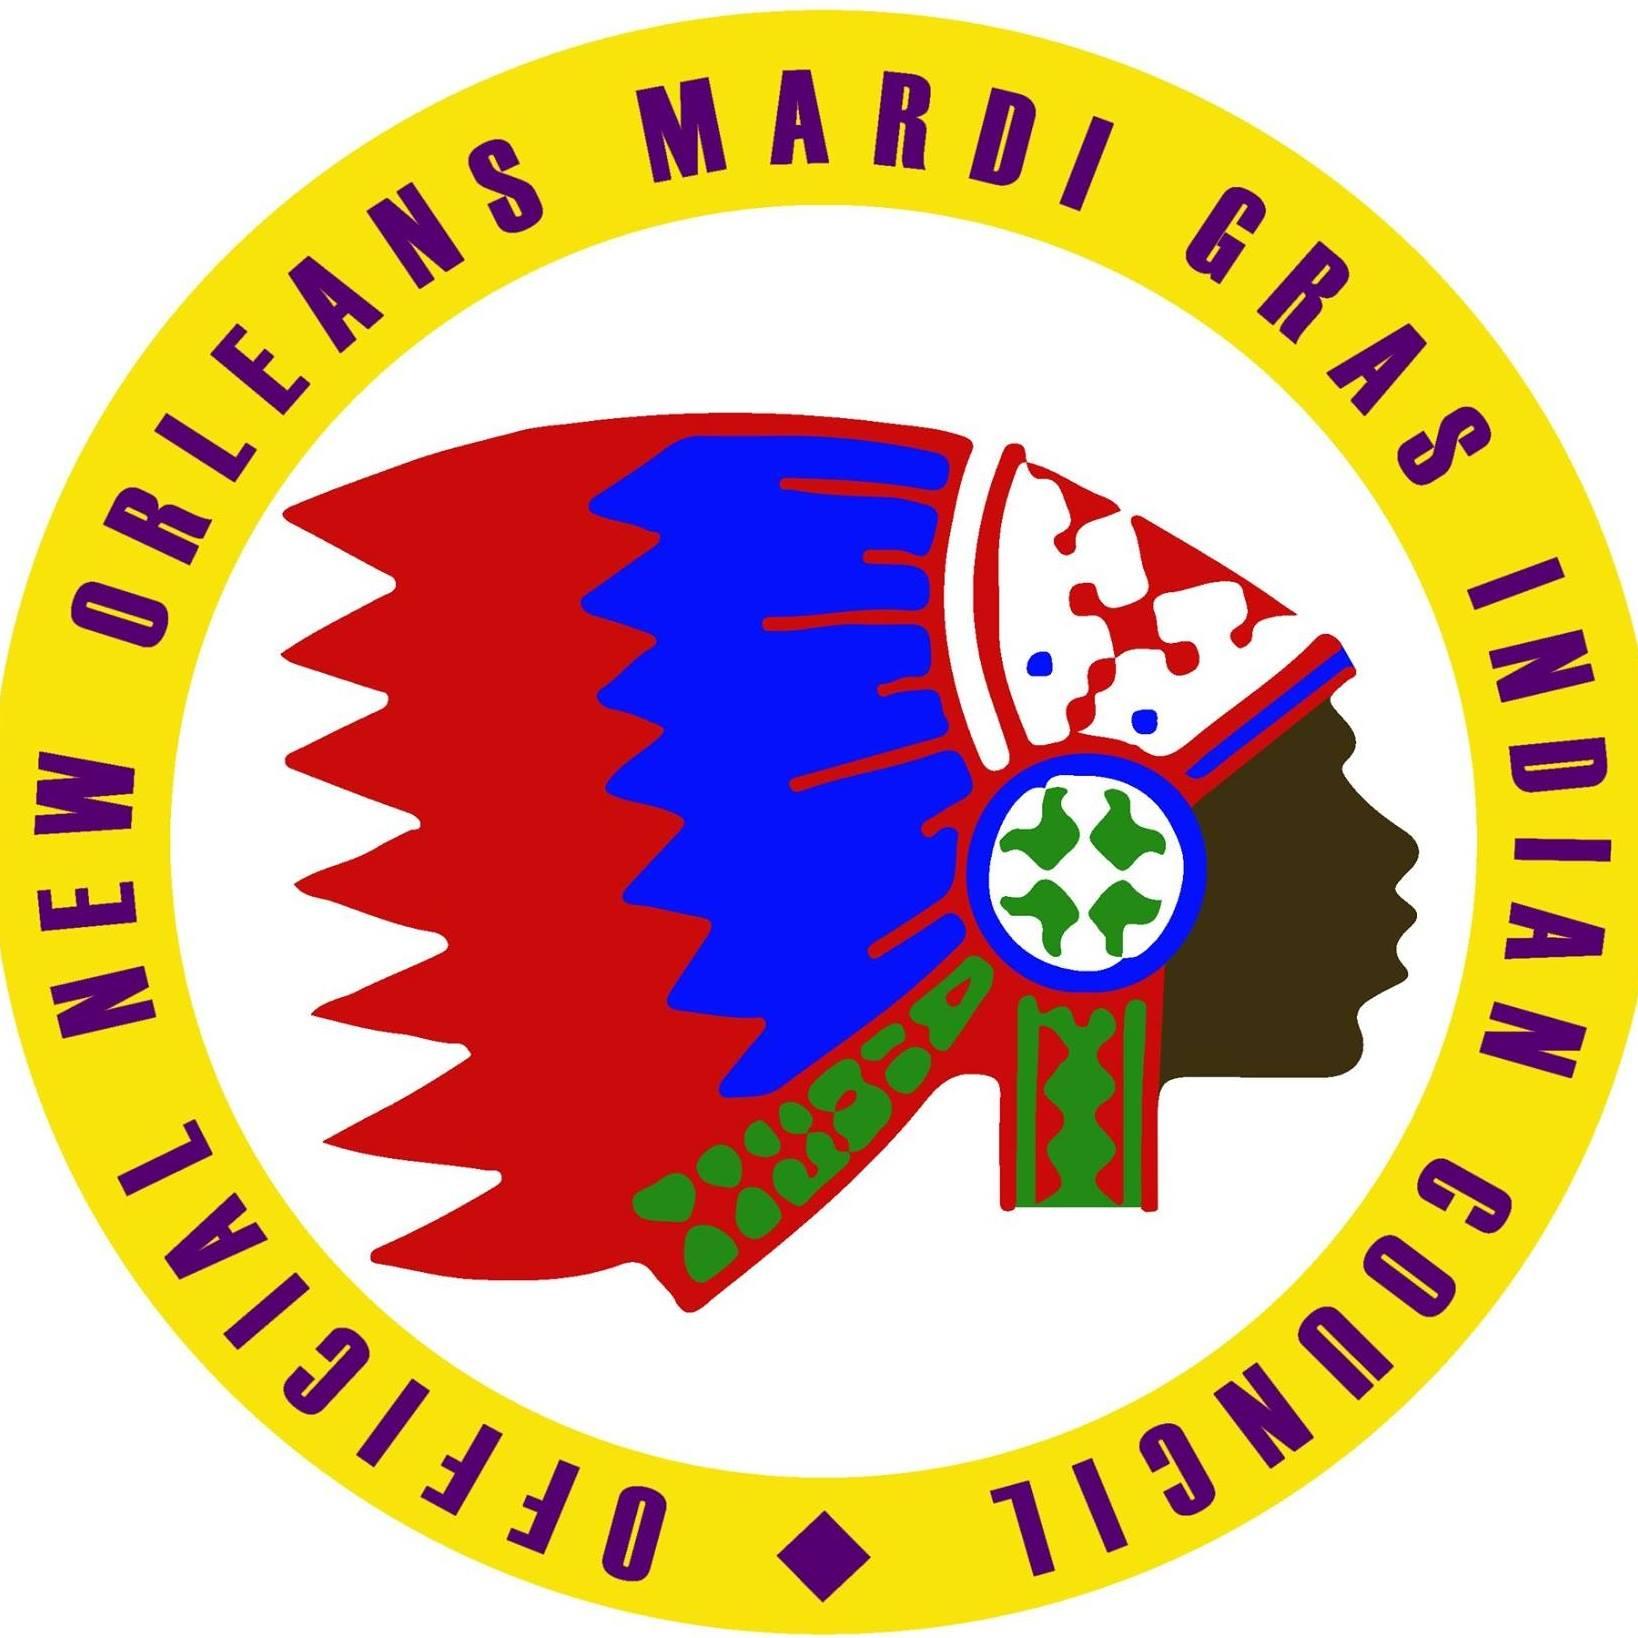 Mardi Gras Indian Council logo